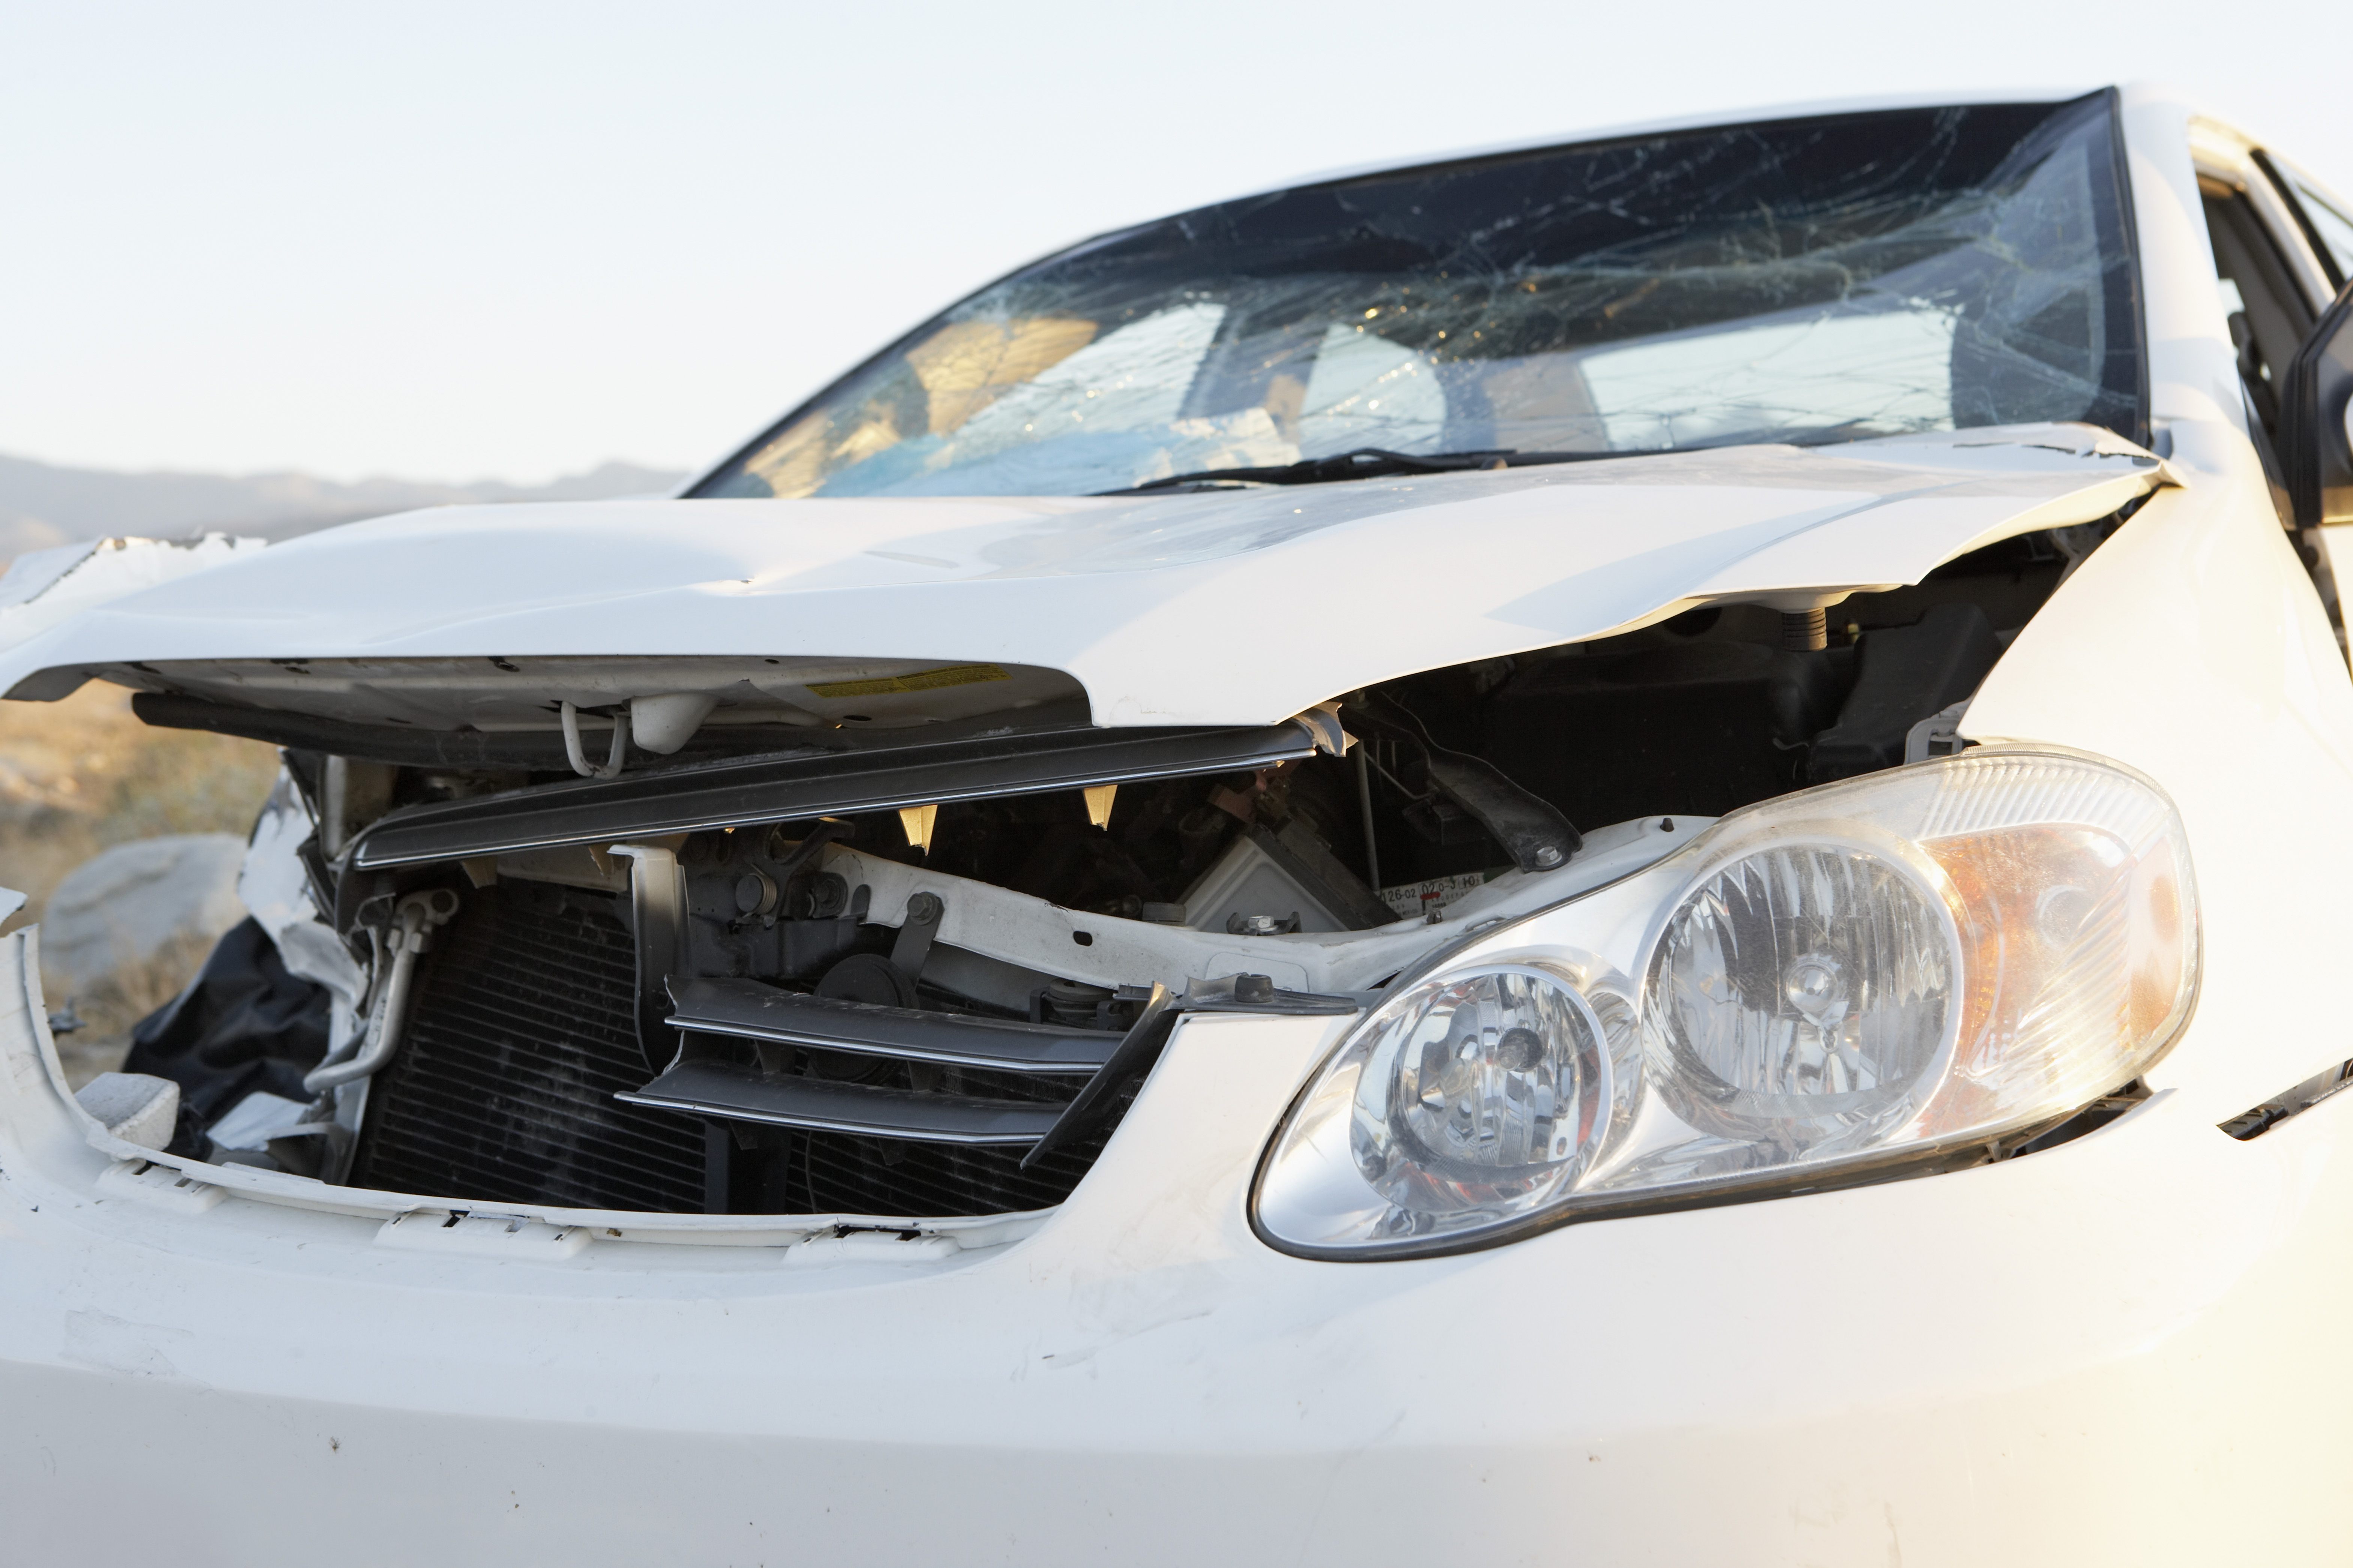 crash car needs money to repair